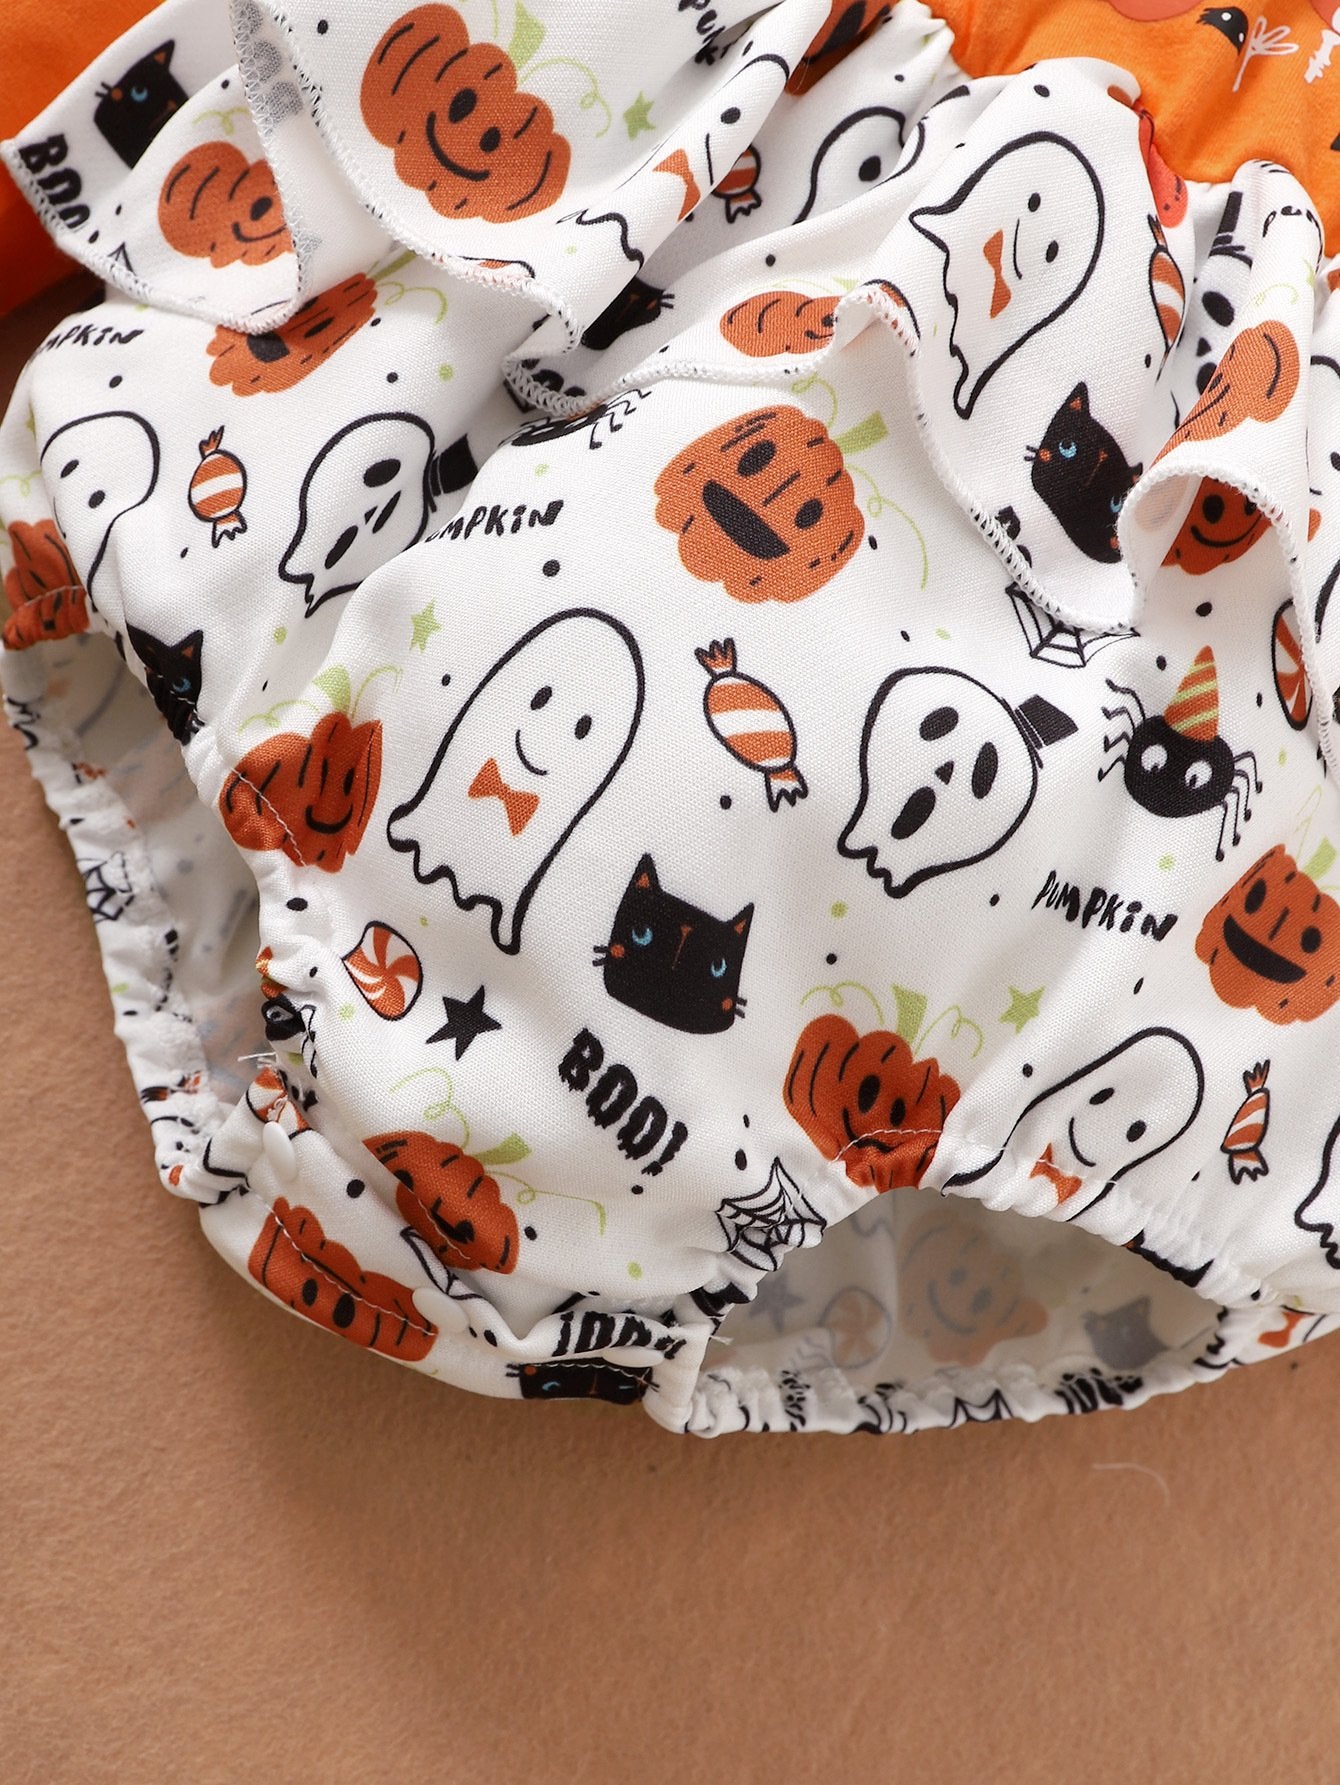 Baby Girls Halloween Cartoon Printed Long Sleeve Romper & Headband baby wholesale vendors